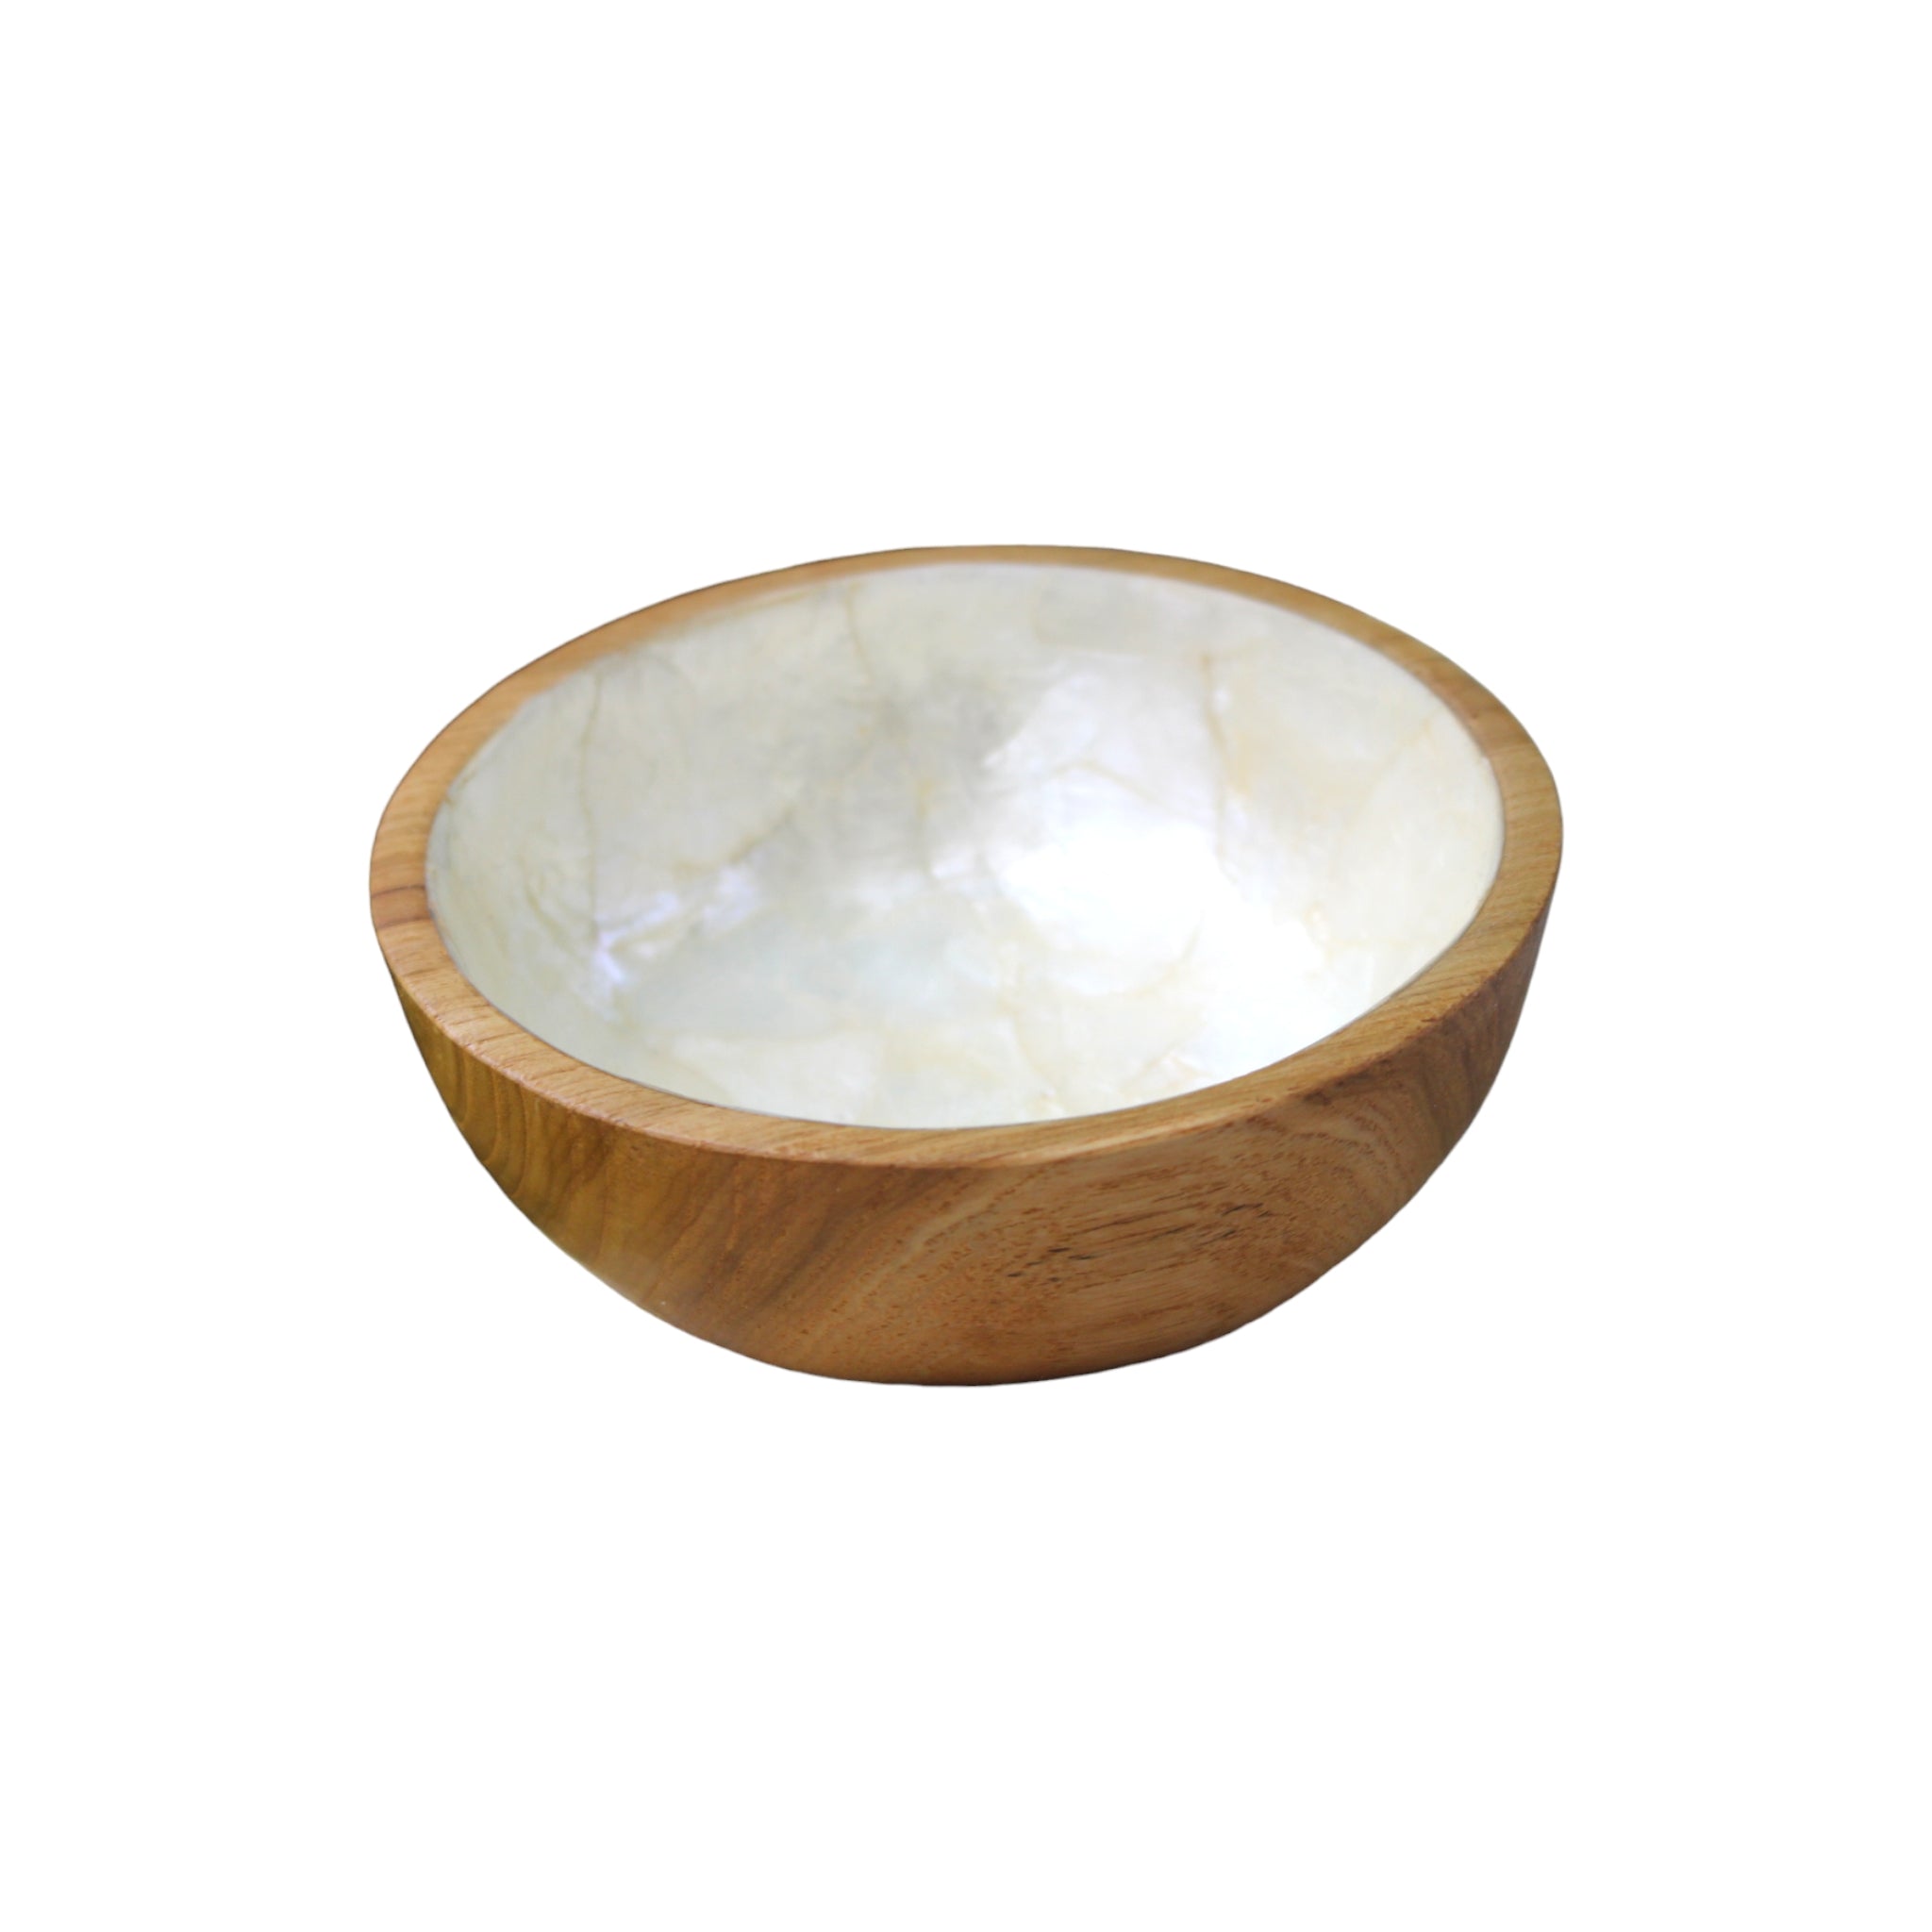 Teak Wood Bowl with Capiz Shell